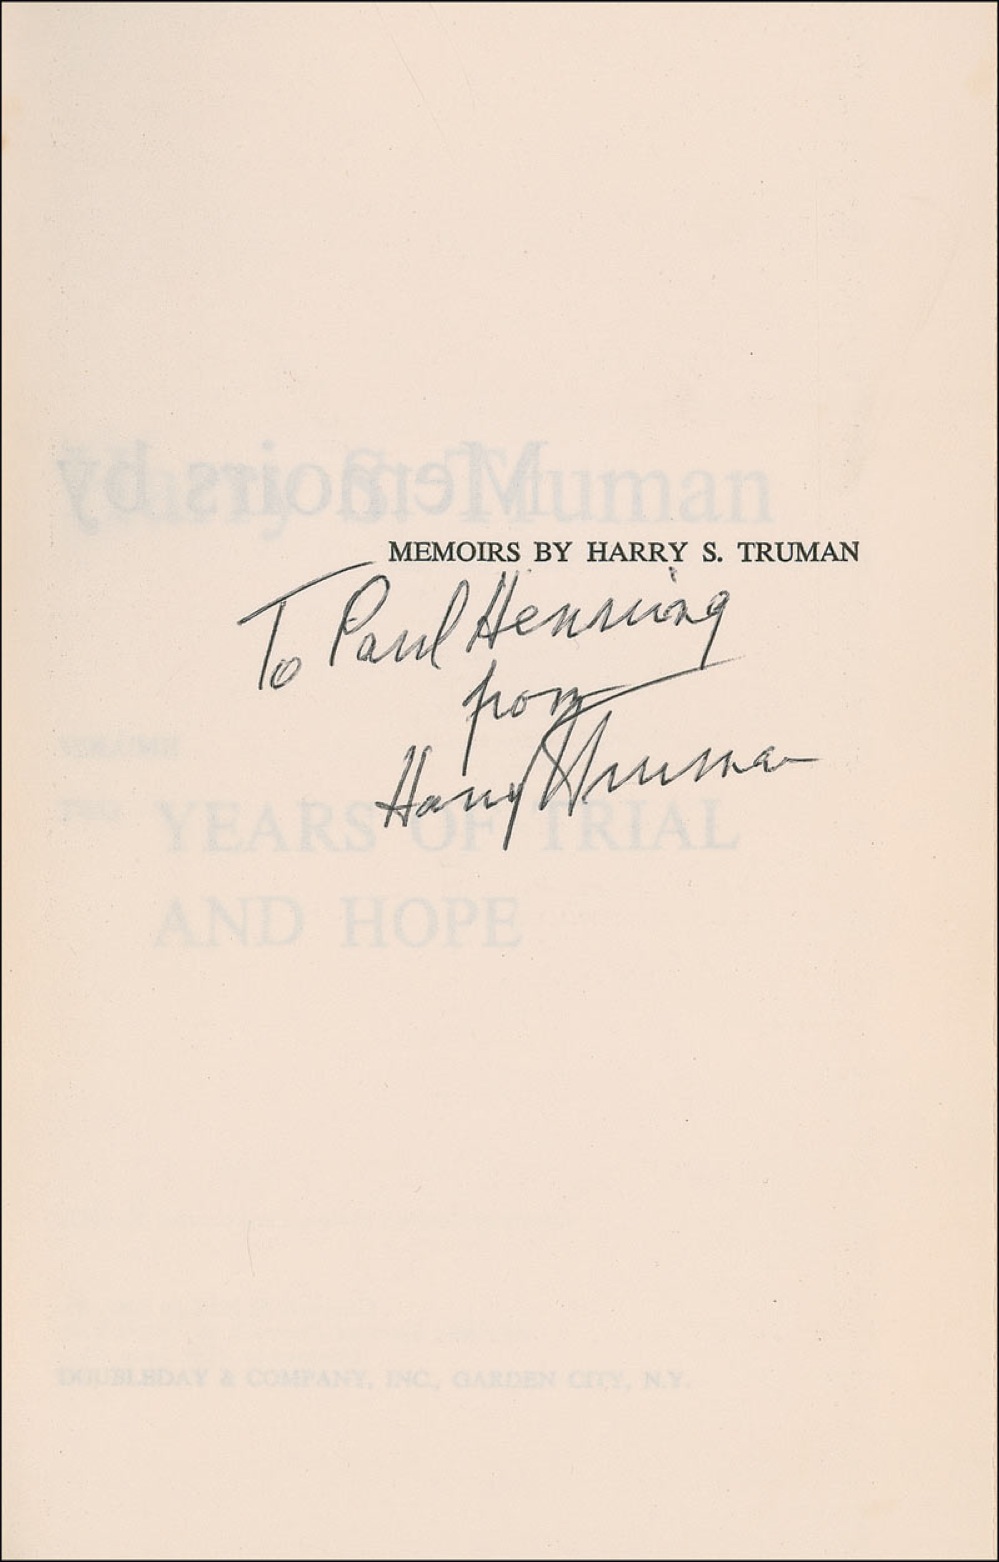 Lot #135 Harry S. Truman